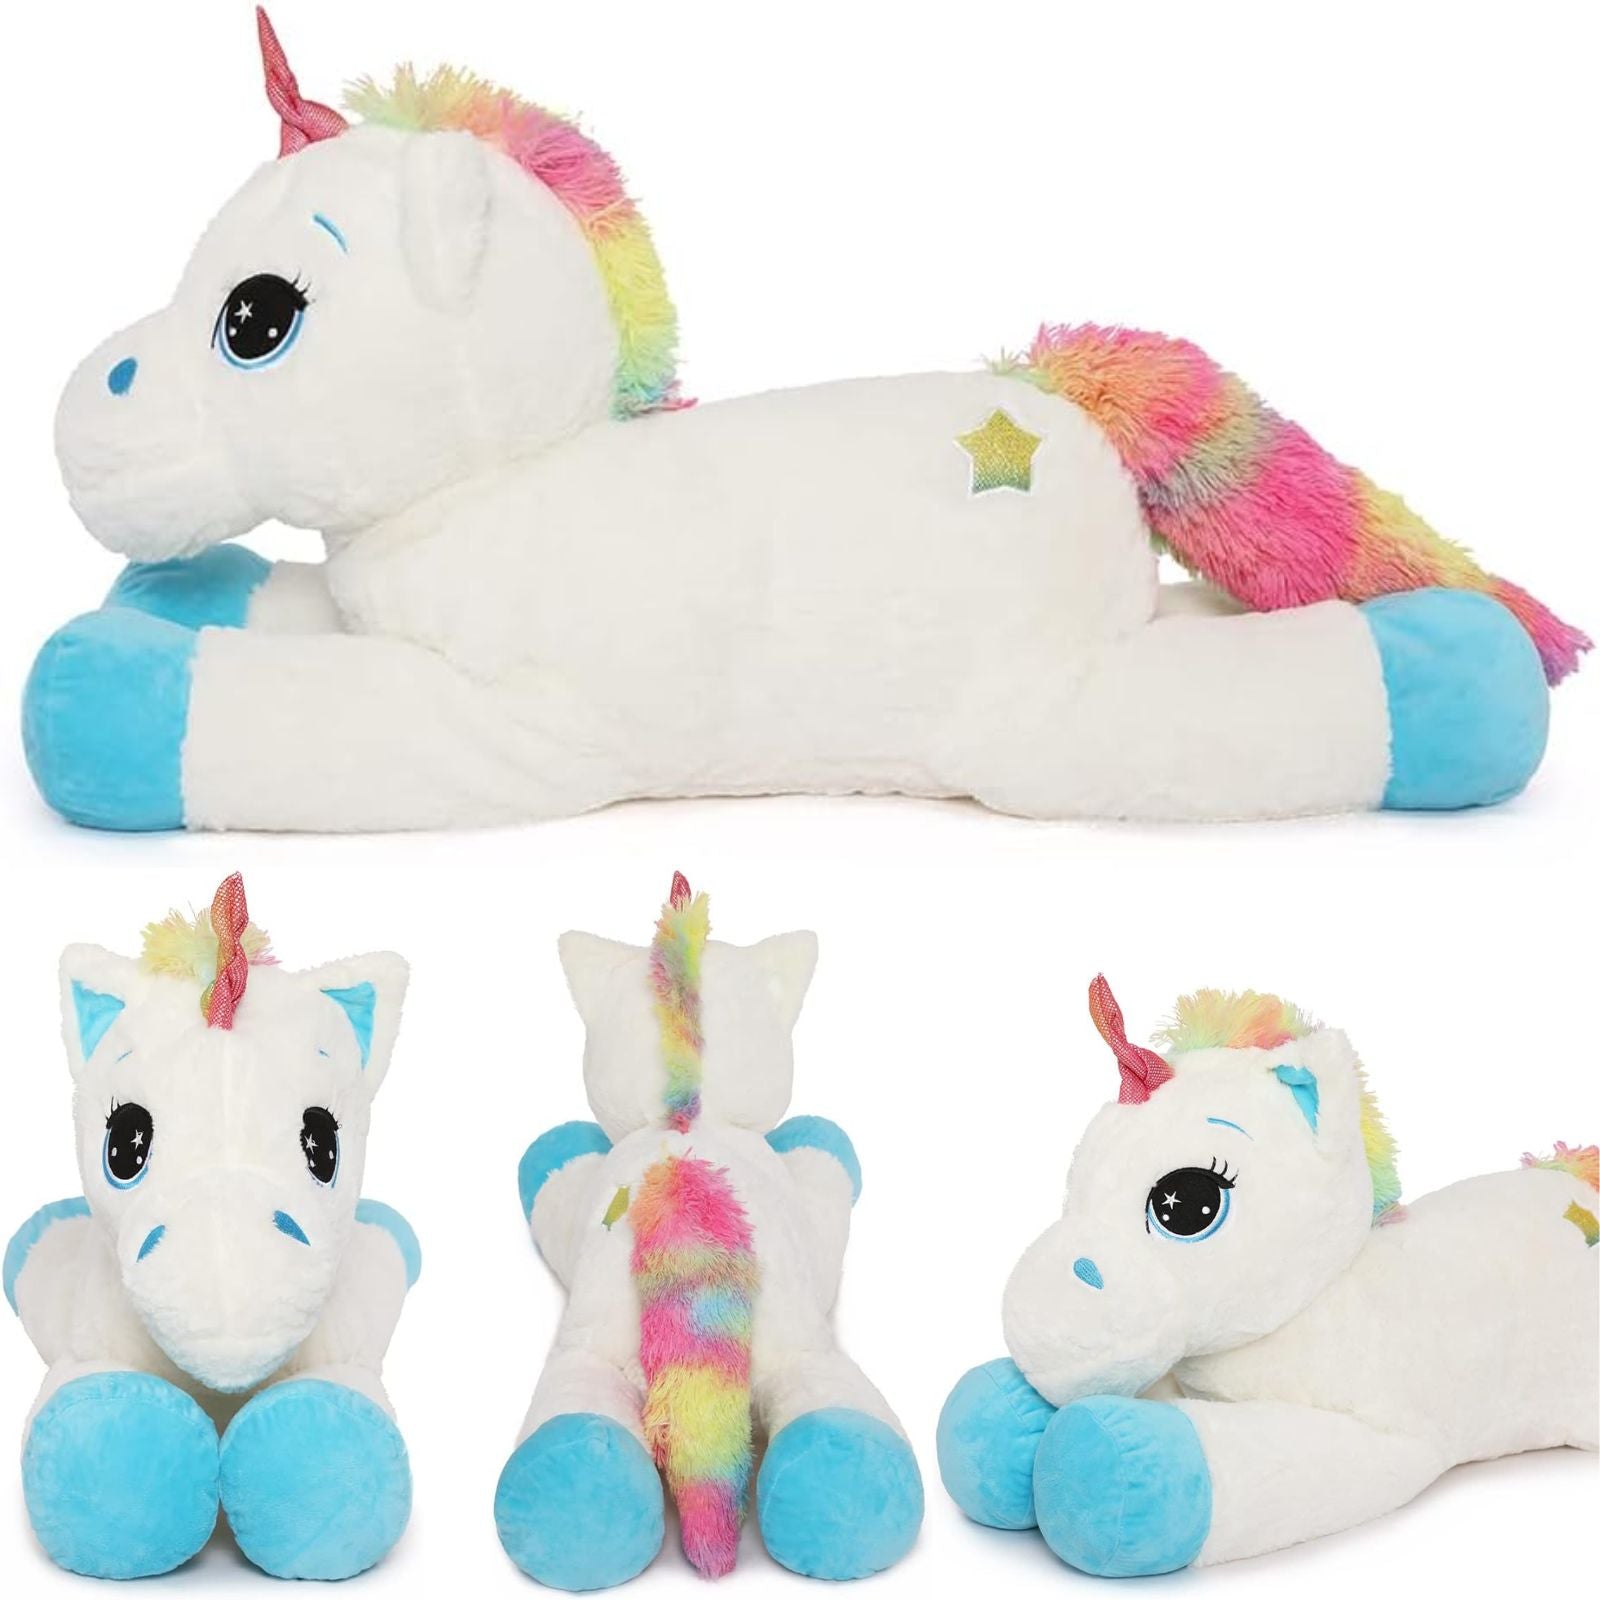 Giant Unicorn Plush Toy, 32 Inches